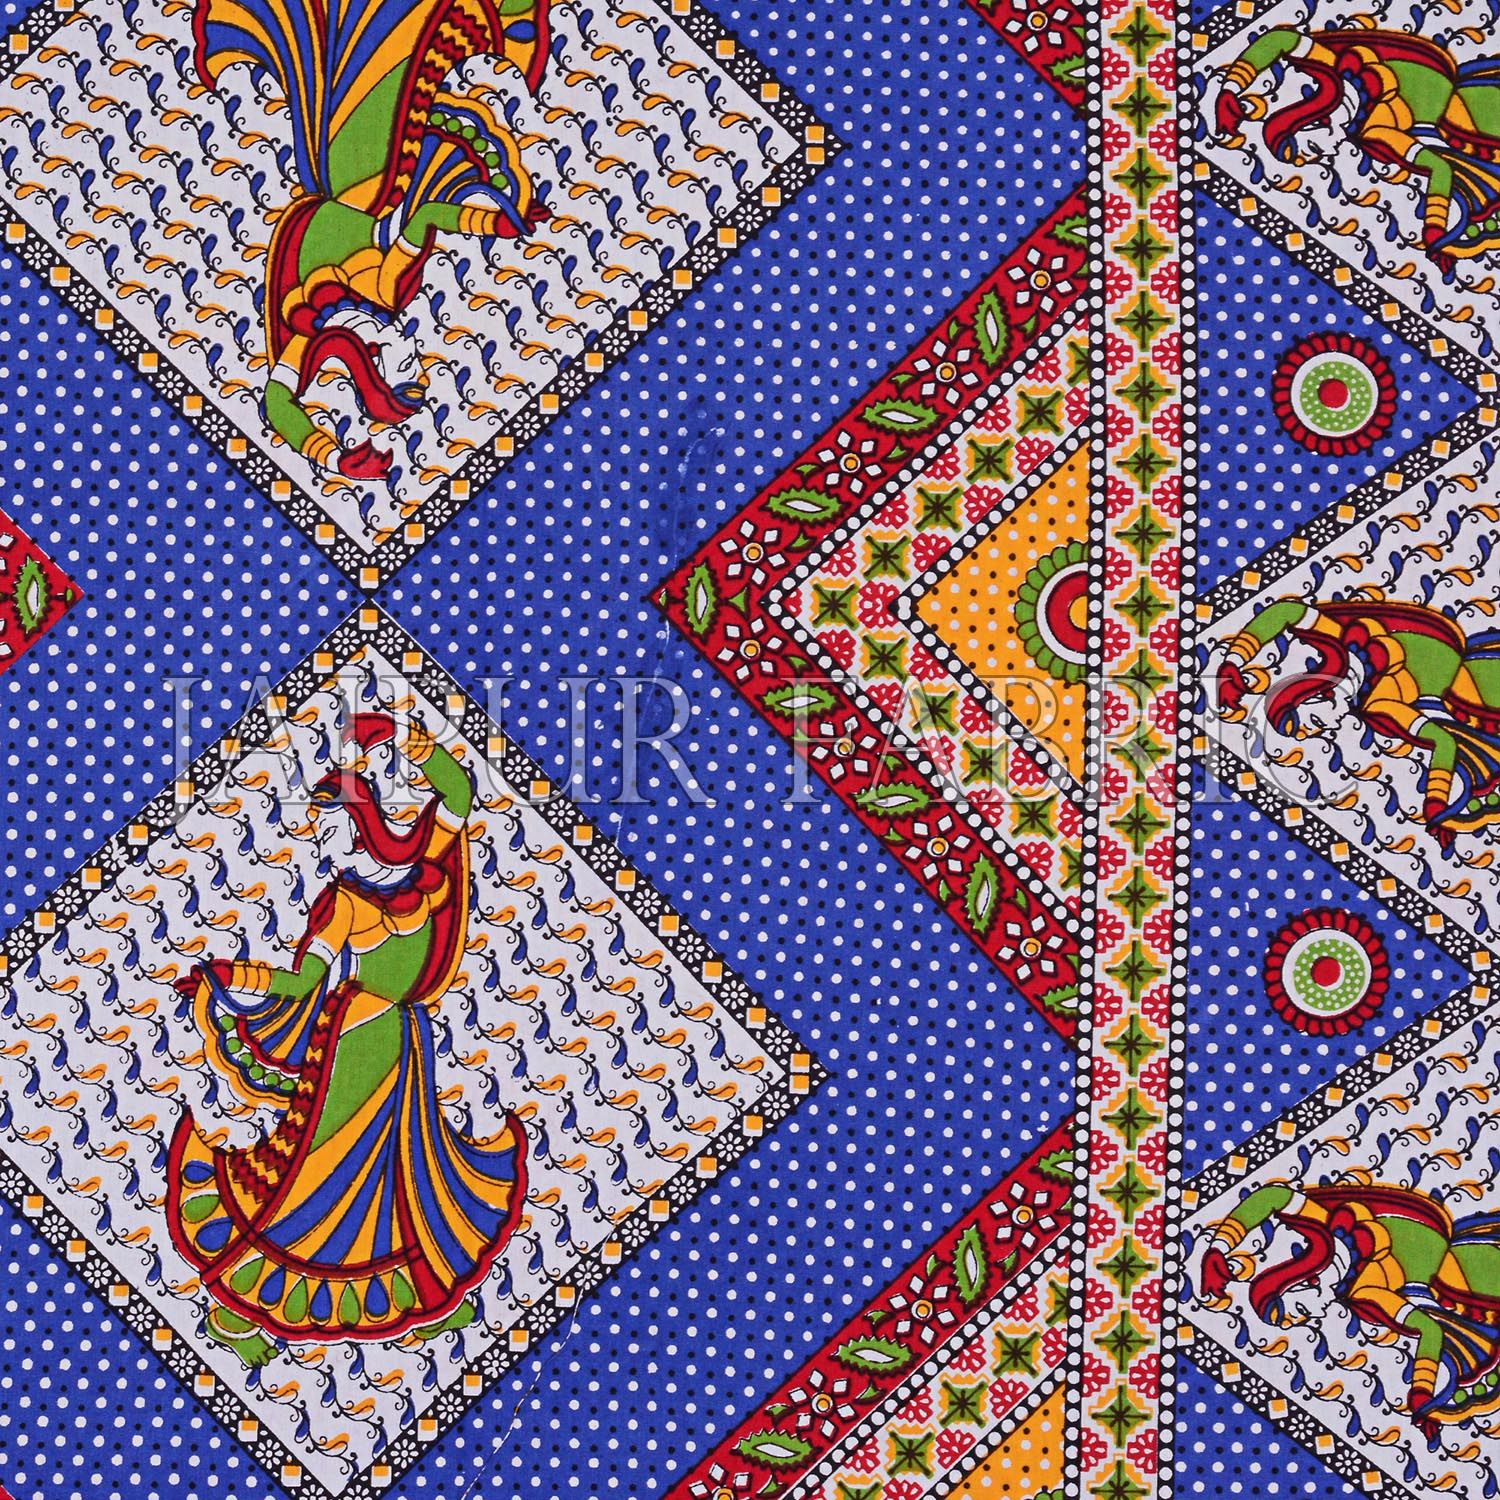 Blue Base jaipur Folk dance Design Double Bedsheet With Pillow Covers